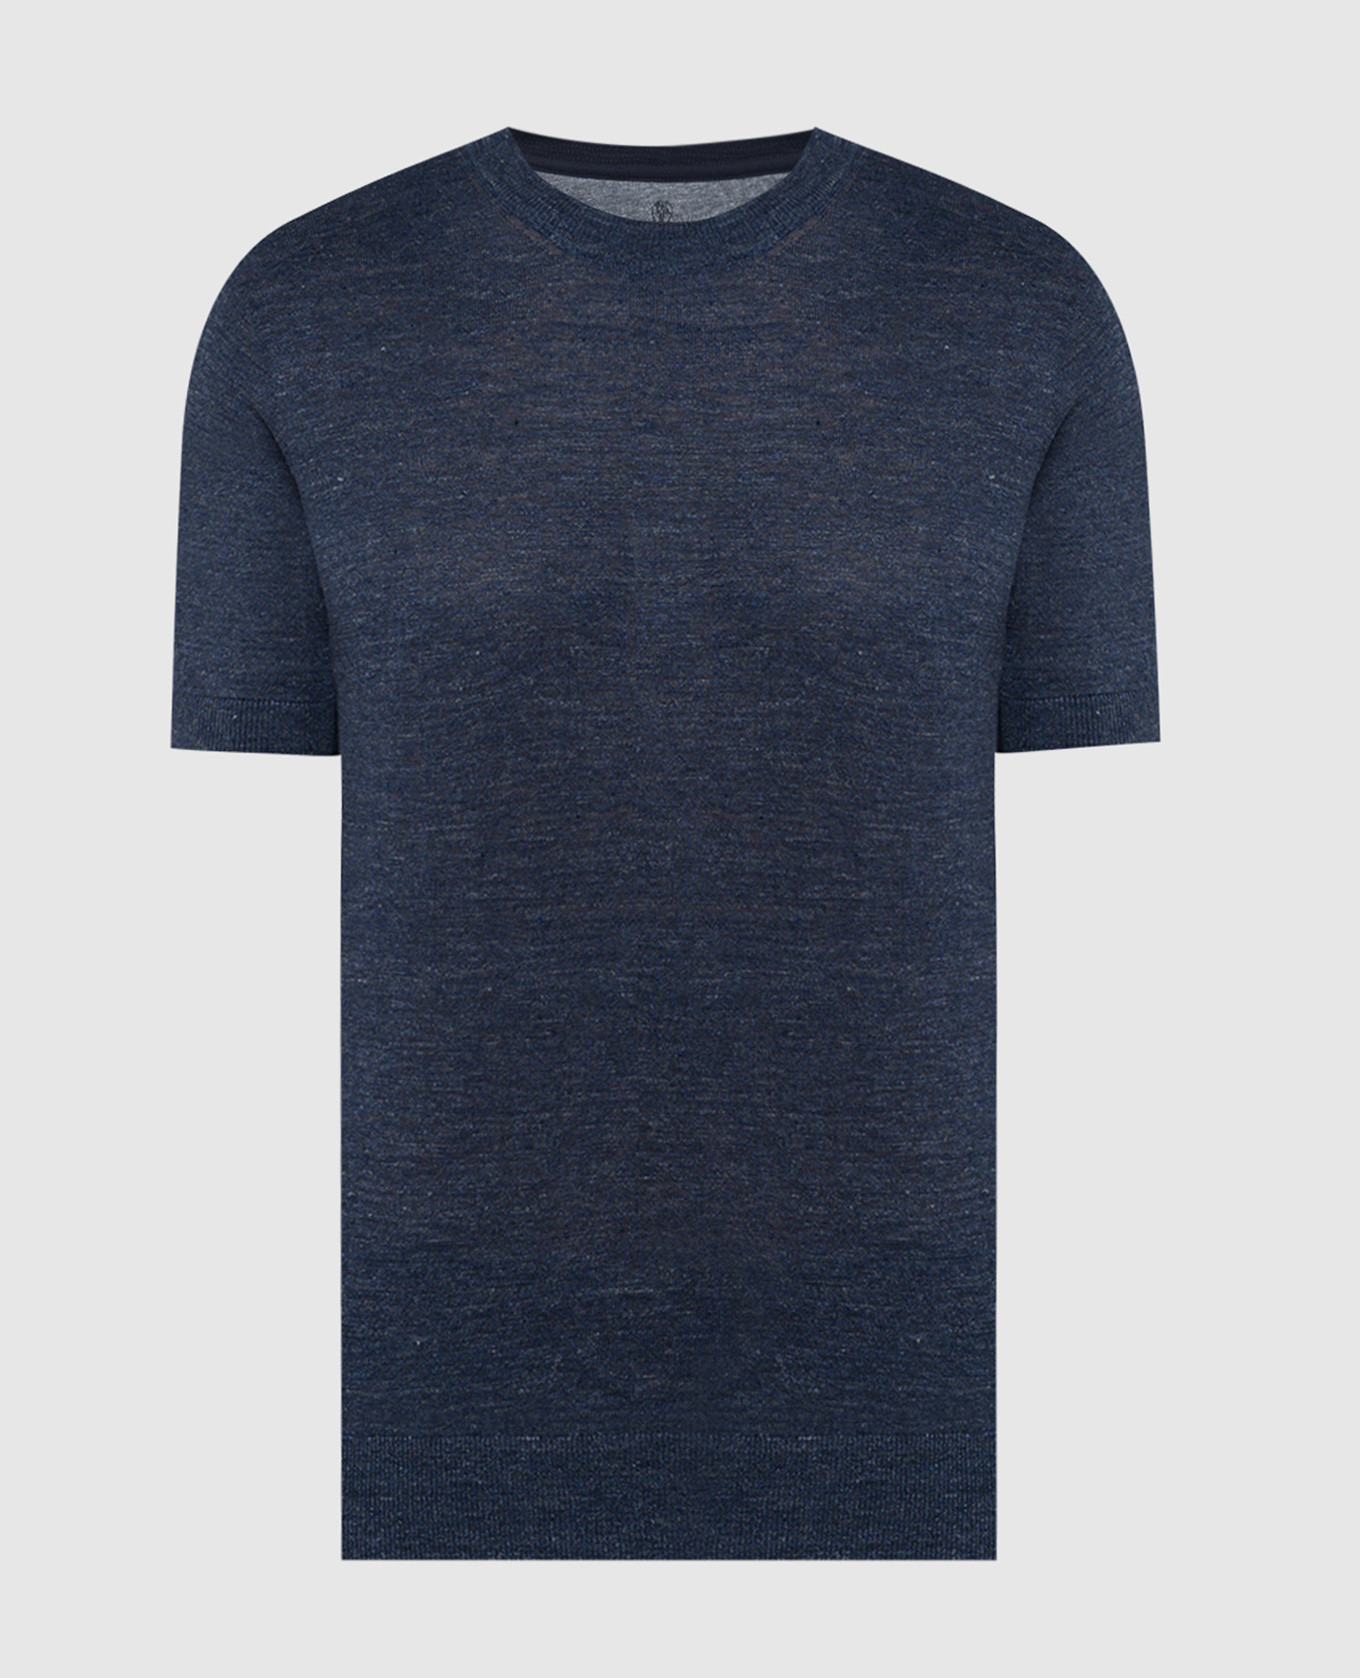 Синяя меланжевая футболка с леном